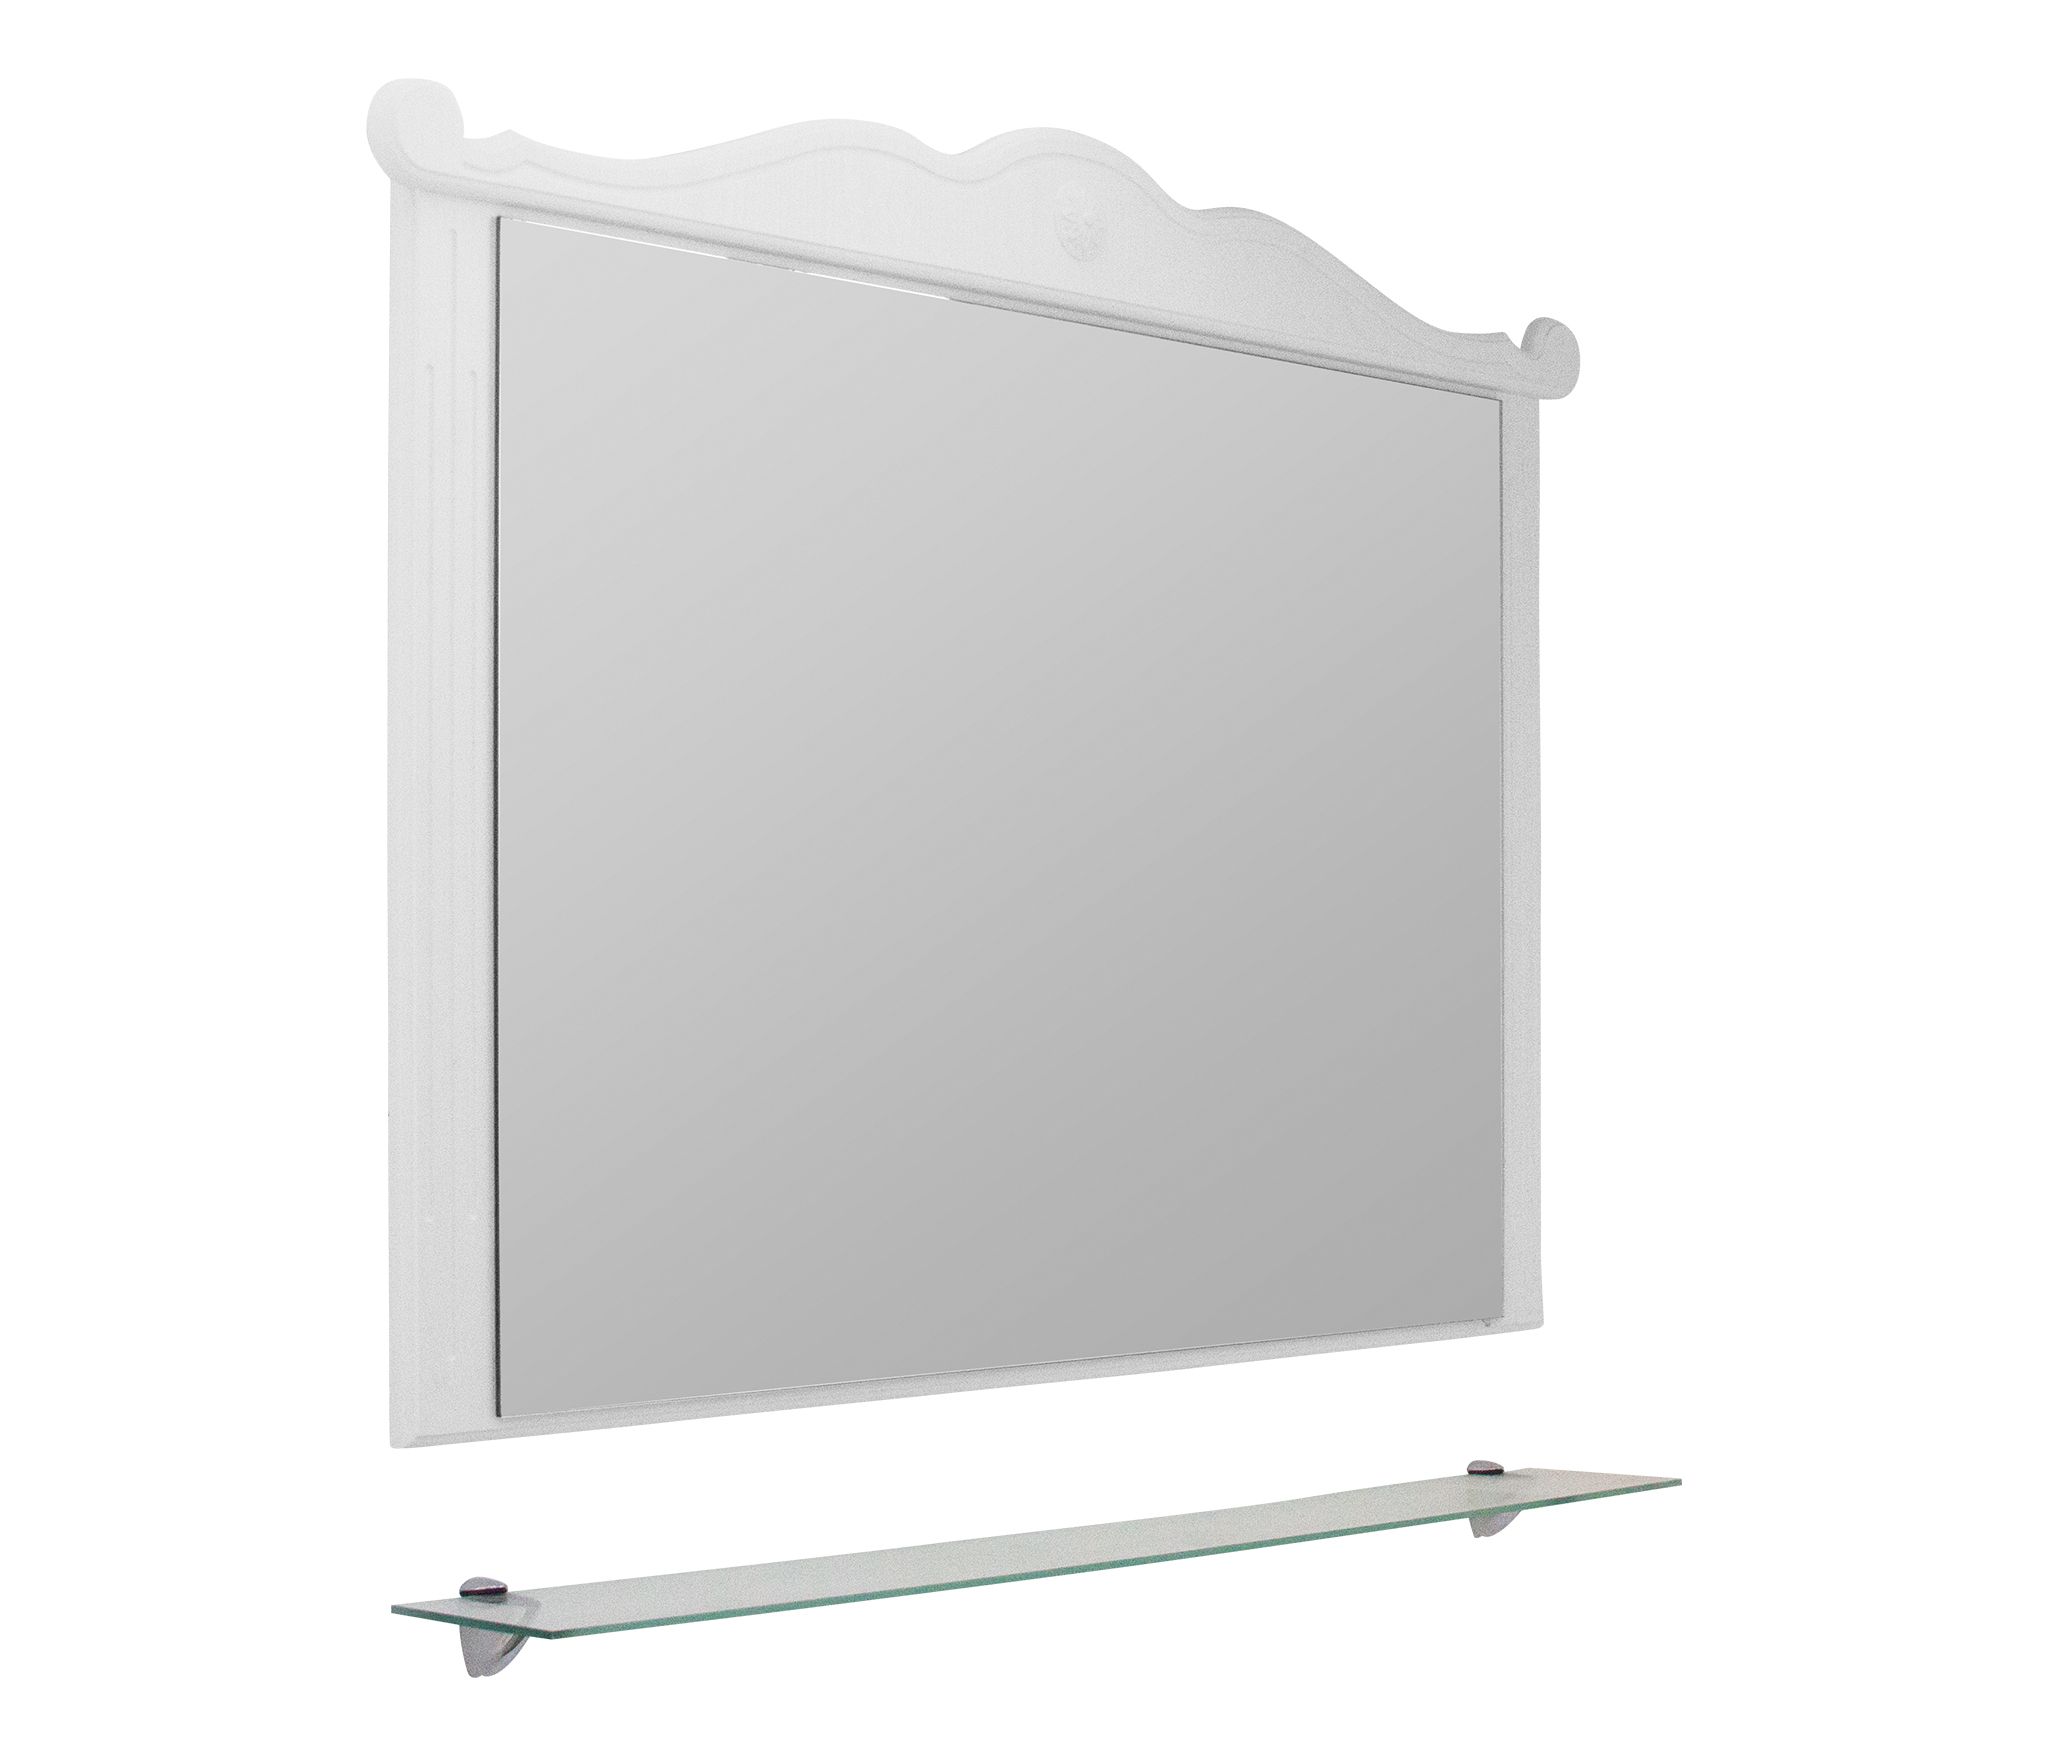 Зеркало без подсветки MIXLINE Прованс-105 белый ясень (536525)